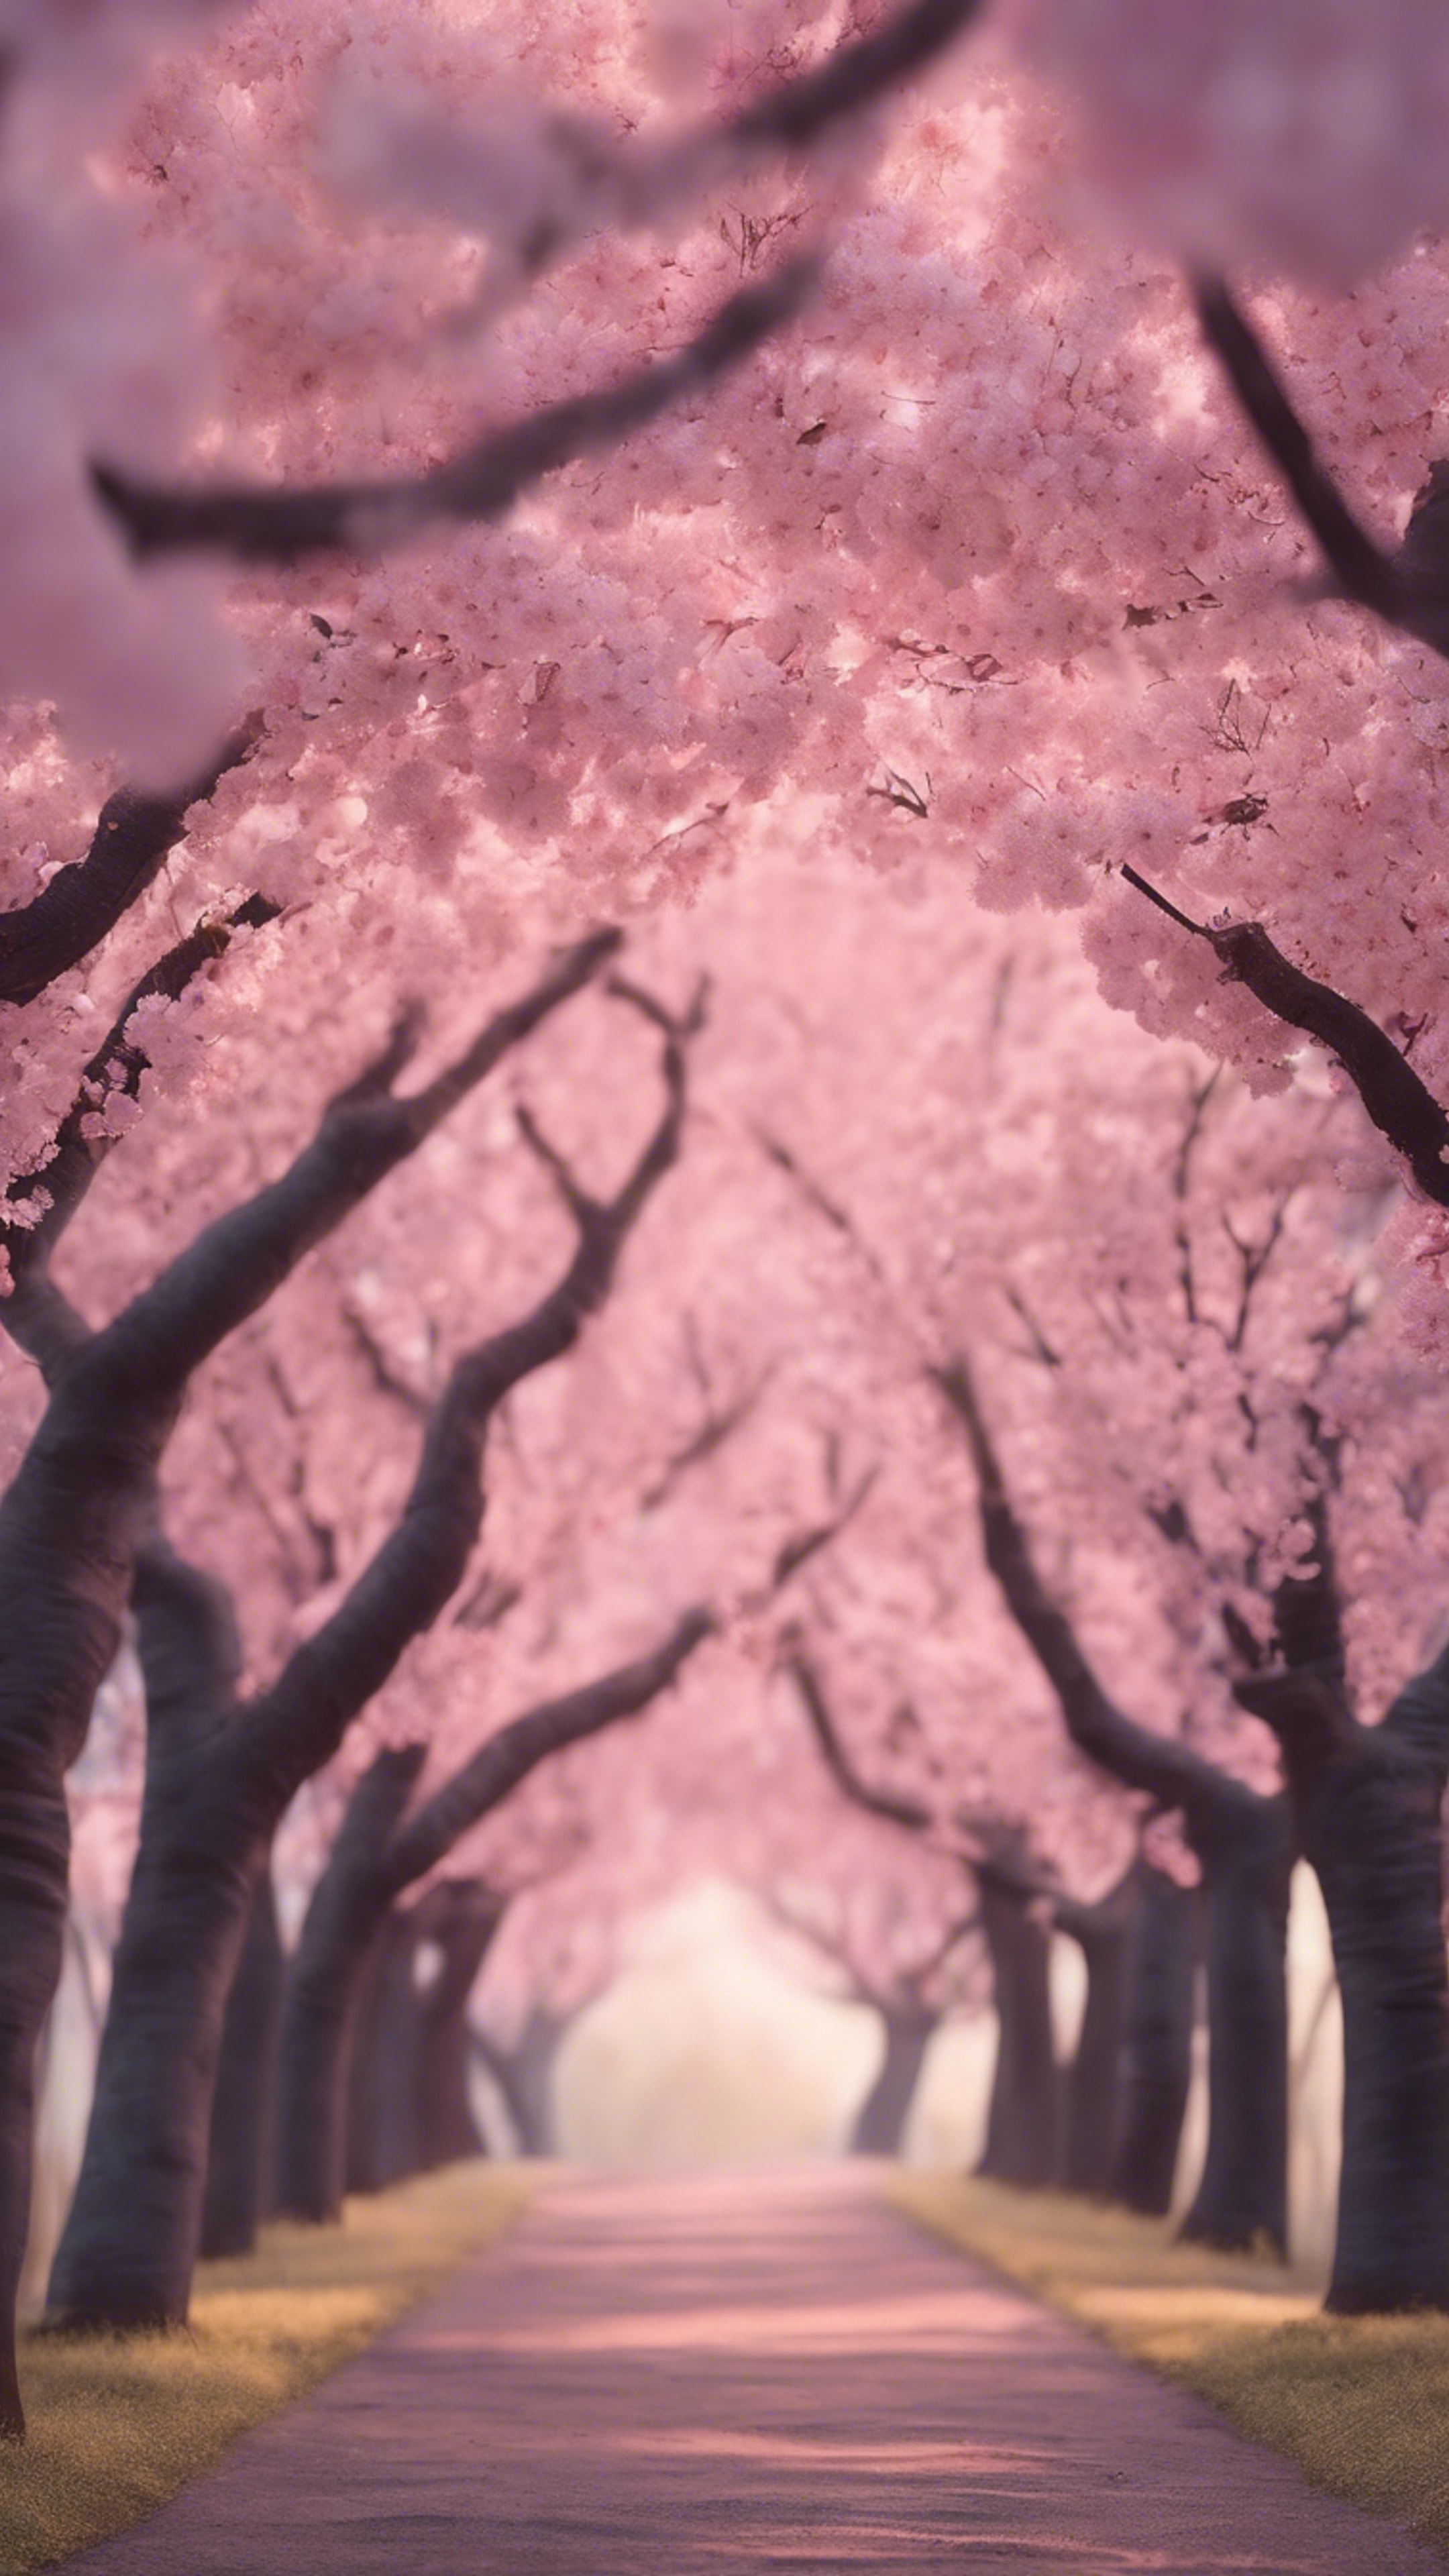 A magical dream landscape of a soft pink cherry blossom avenue under a romantic dusky sky. Hình nền[c79f6cc44b0c40cf871b]